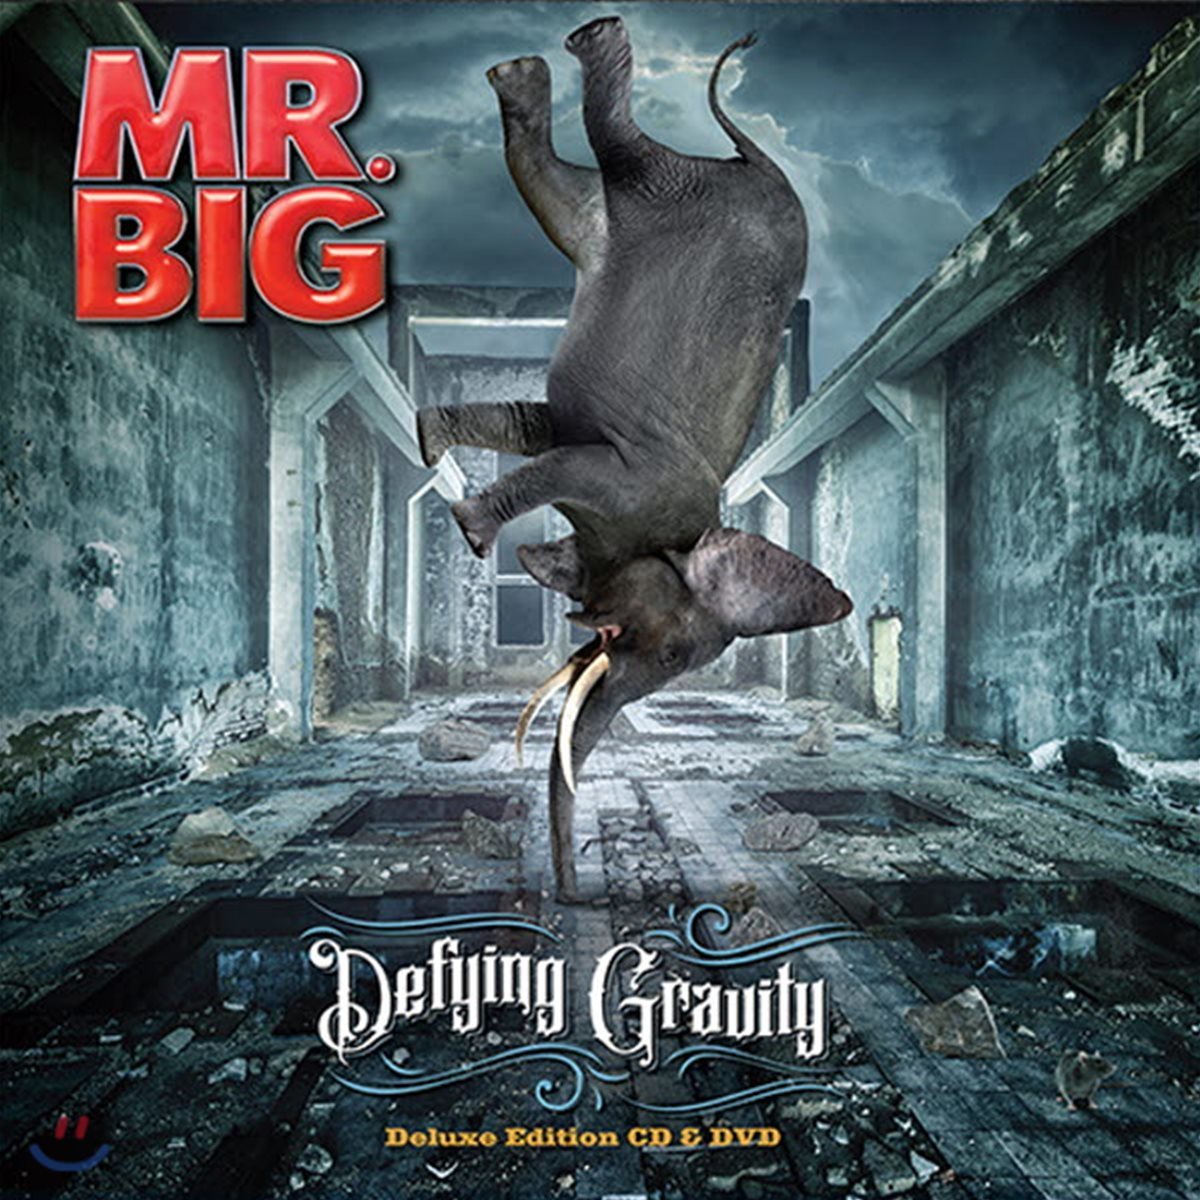 Mr. Big (미스터 빅) - Defying Gravity [CD+DVD] 